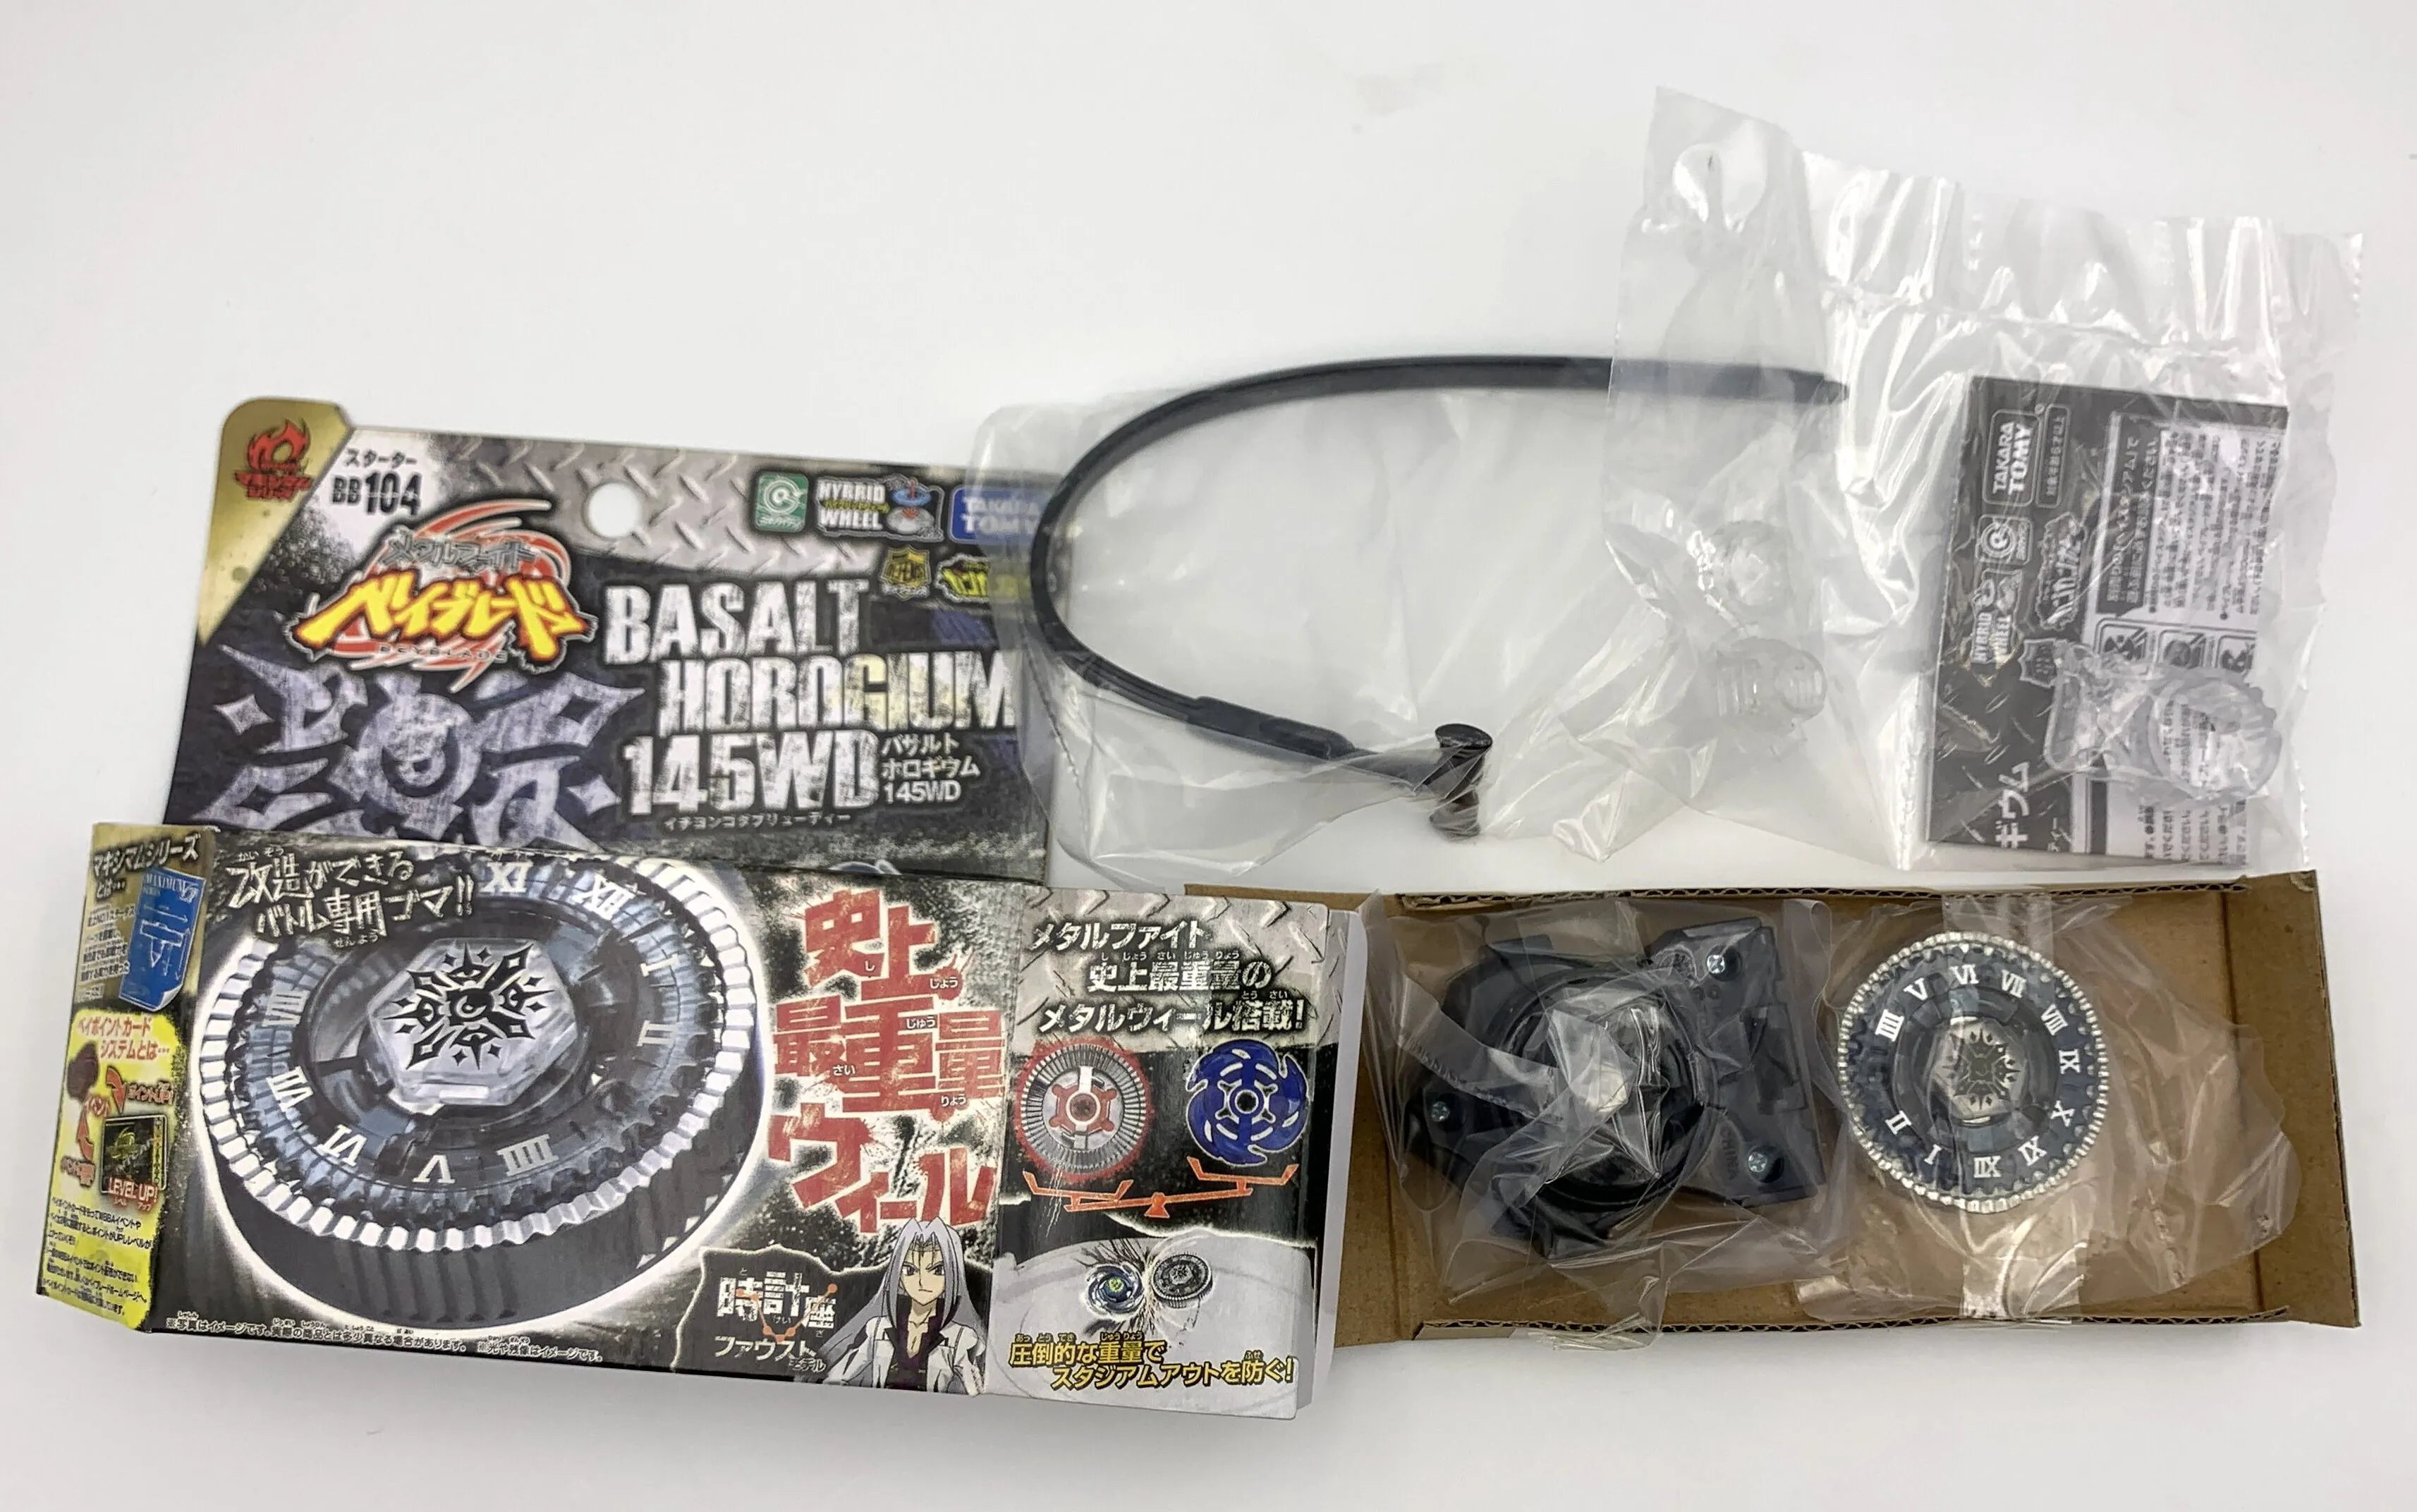 100 takara tomy beyblade BB104 145WD Basalt Horogium Battle Top Starter Set 2012172211018